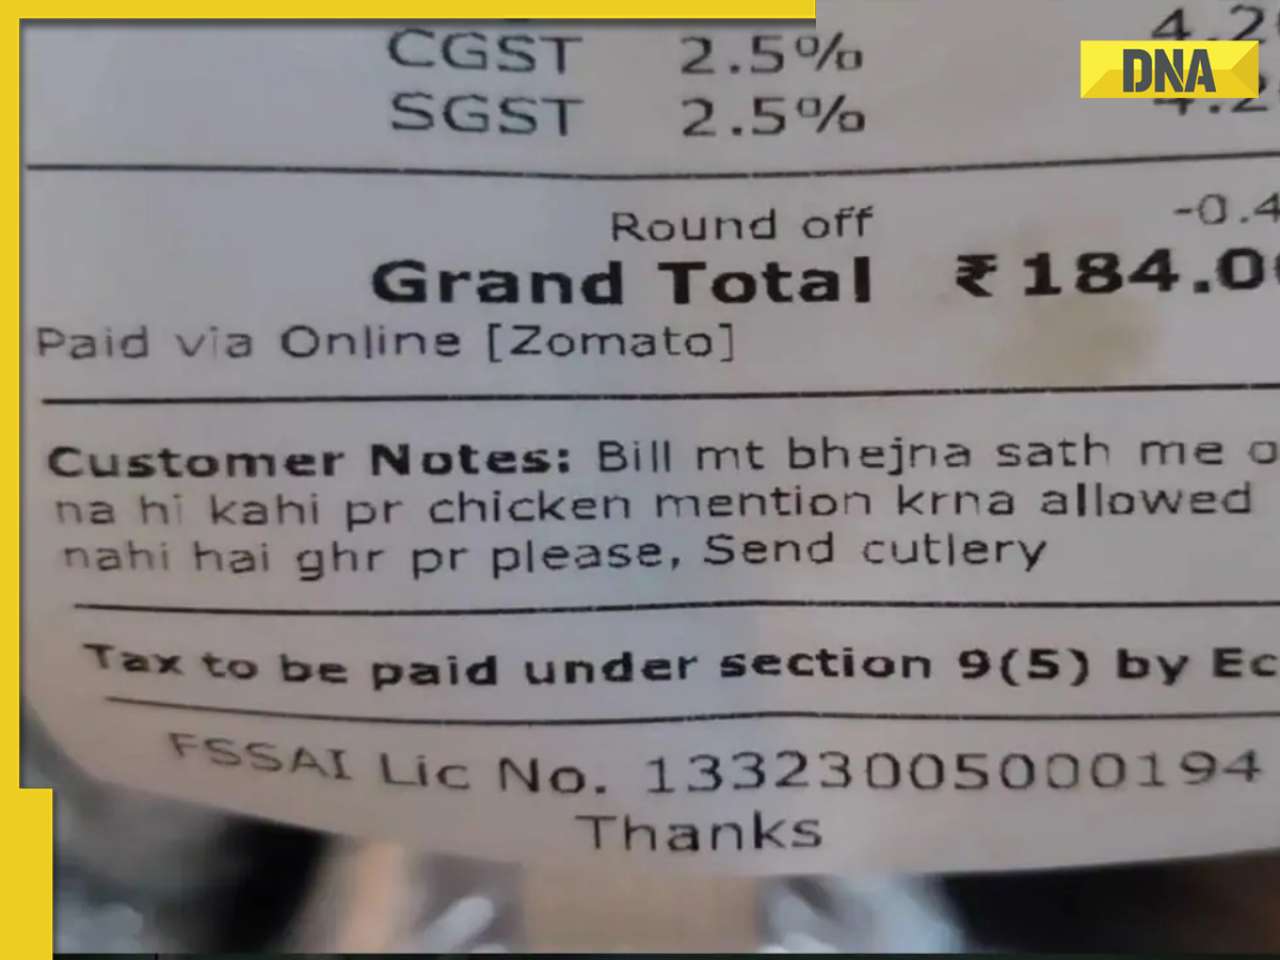 'No bill, no chicken': Customer's hilarious request to Zomato leaves internet in stitches